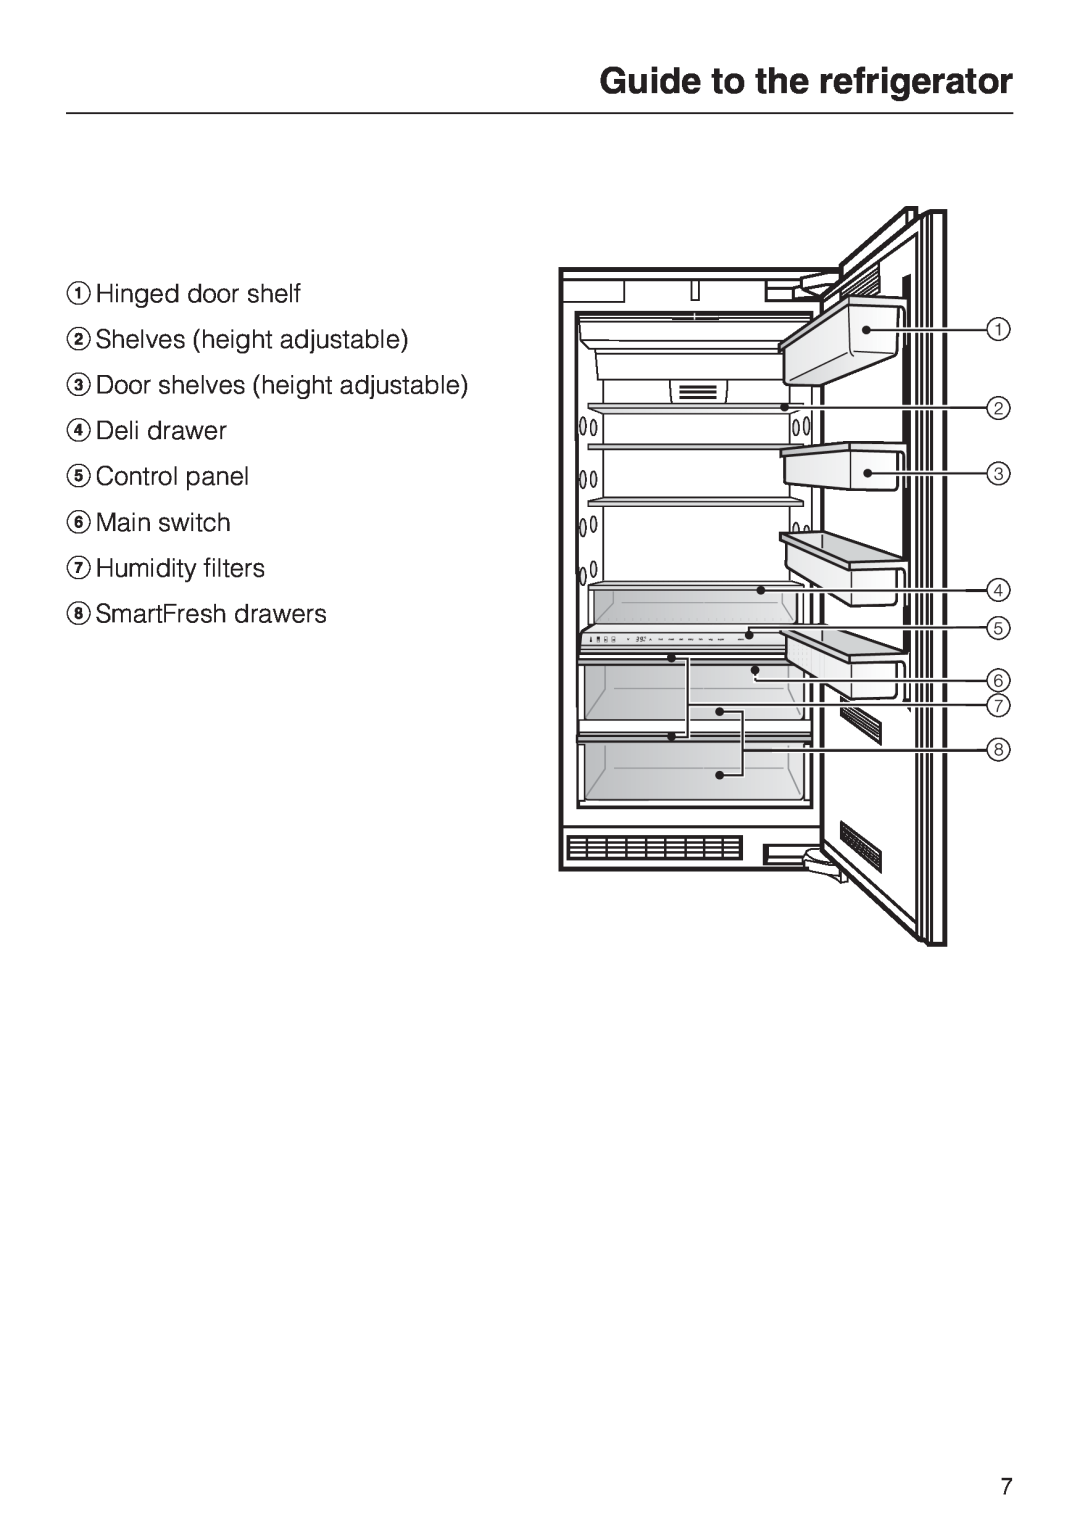 Miele K 1811 Vi, K 1911 Vi Guide to the refrigerator, Hinged door shelf Shelves height adjustable, SmartFresh drawers 